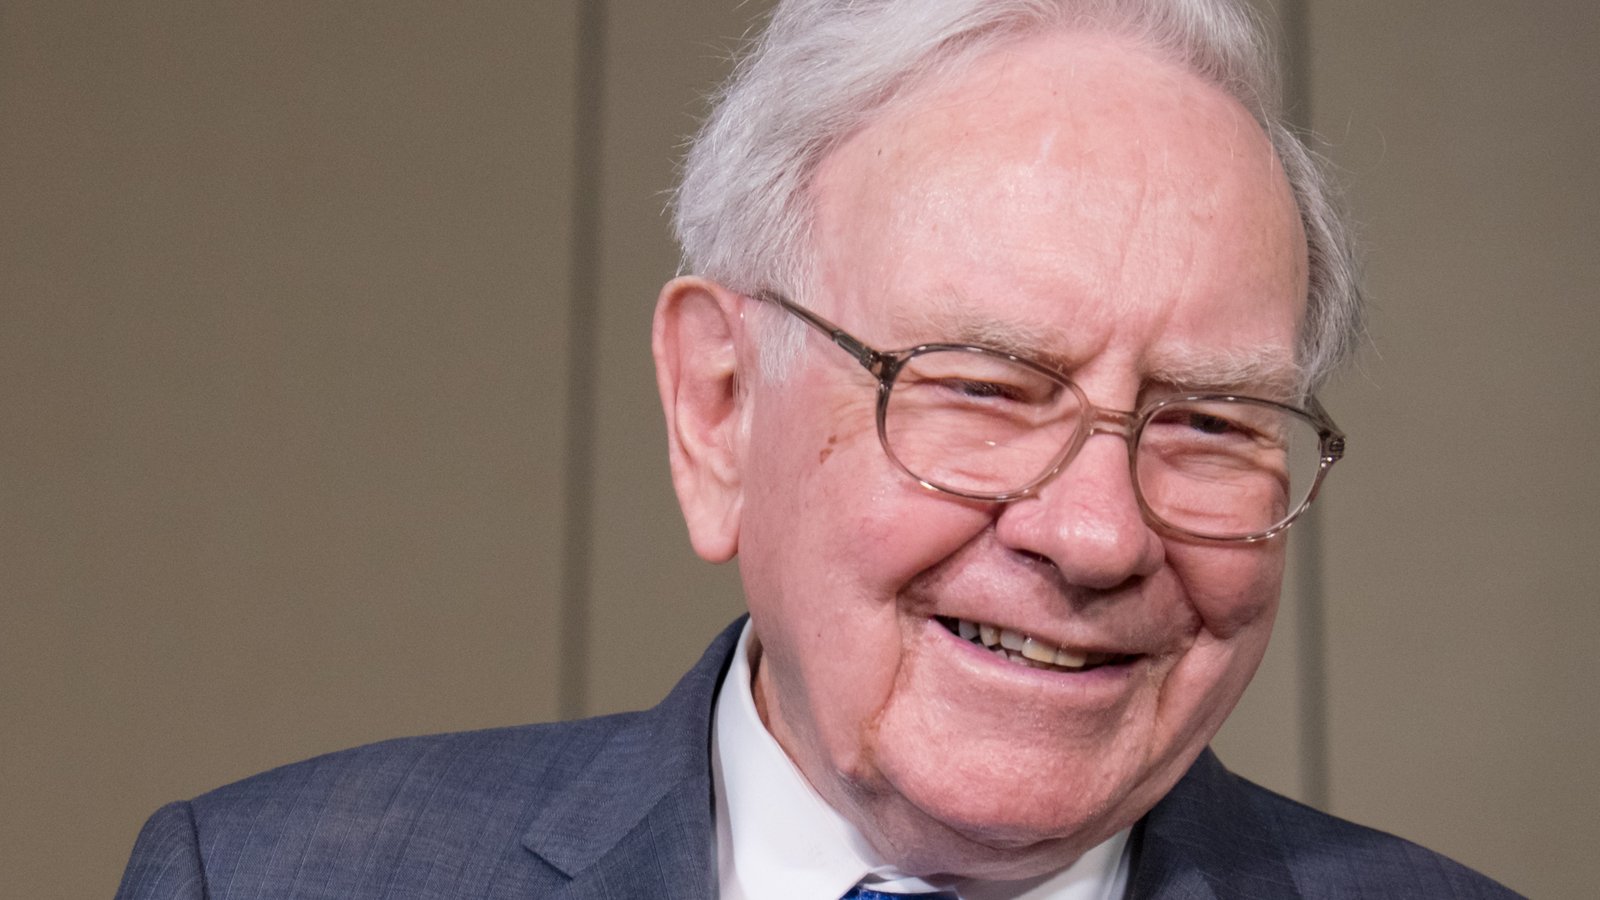 3 Stocks Getting a Warren Buffett Boost